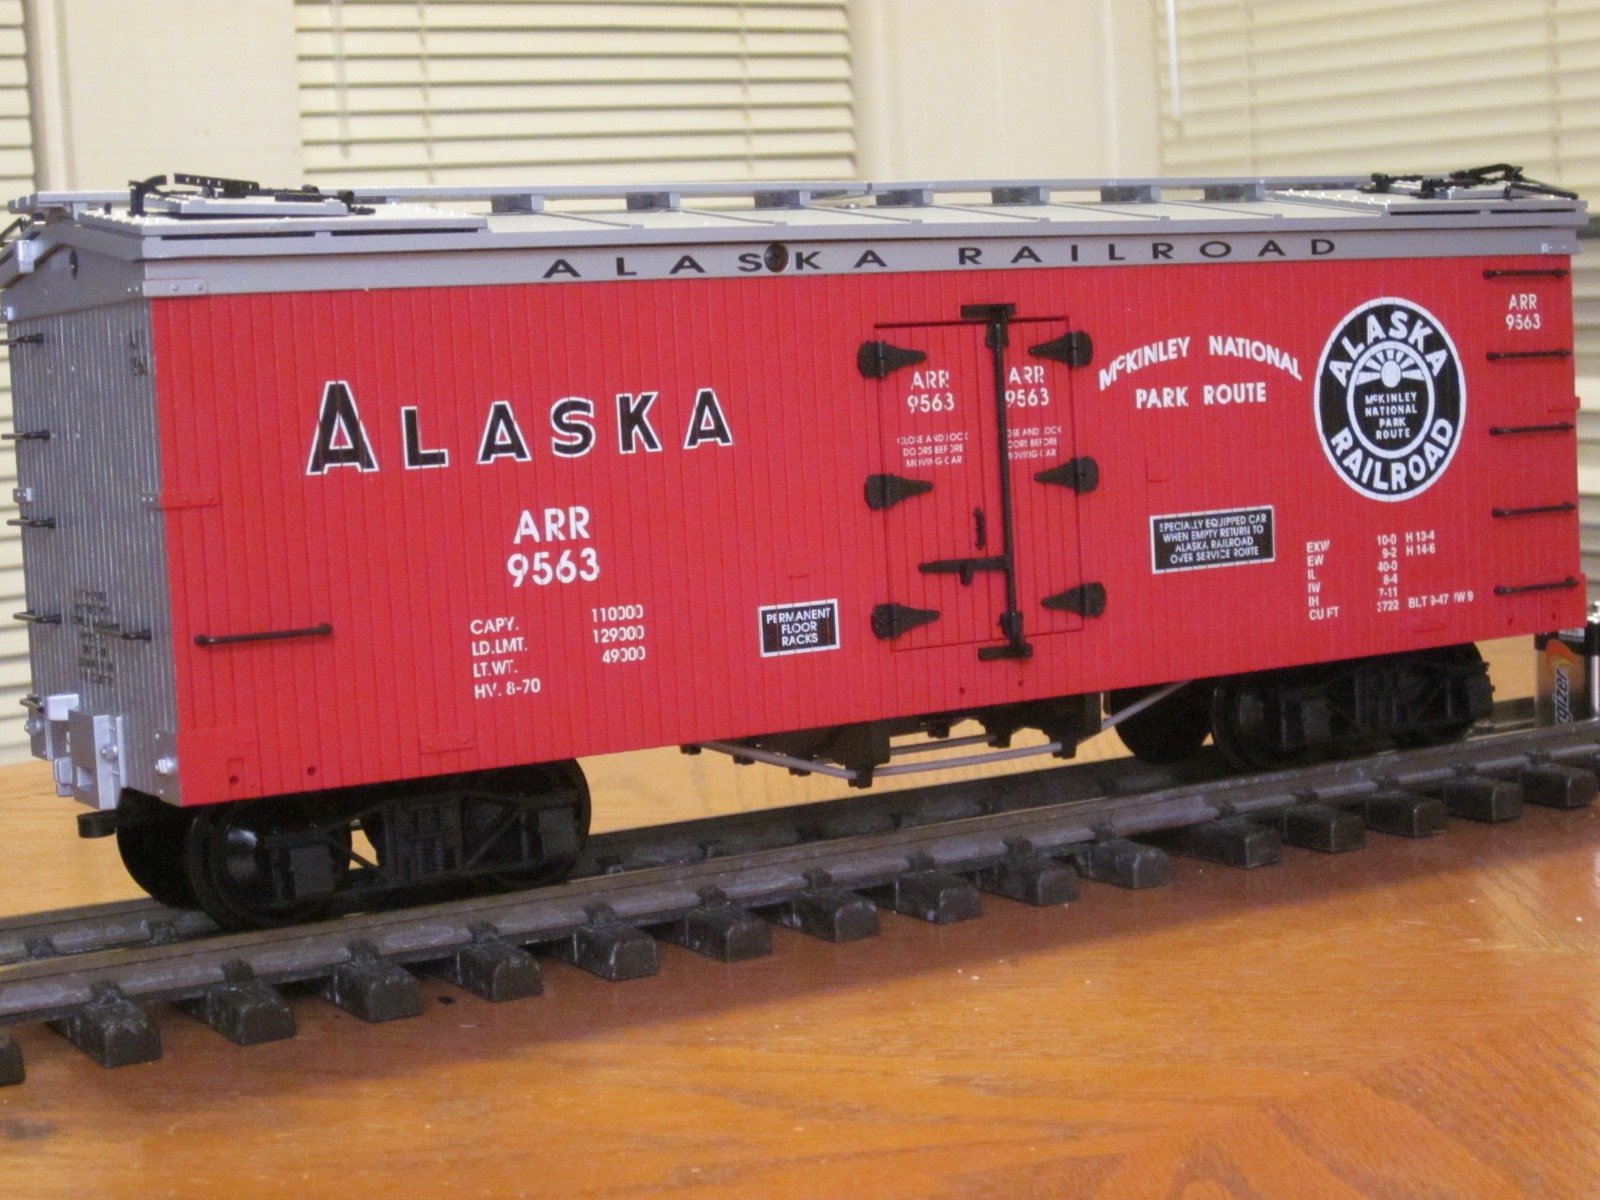 R16204D Alaska RR (Red Silver) ARR 9563